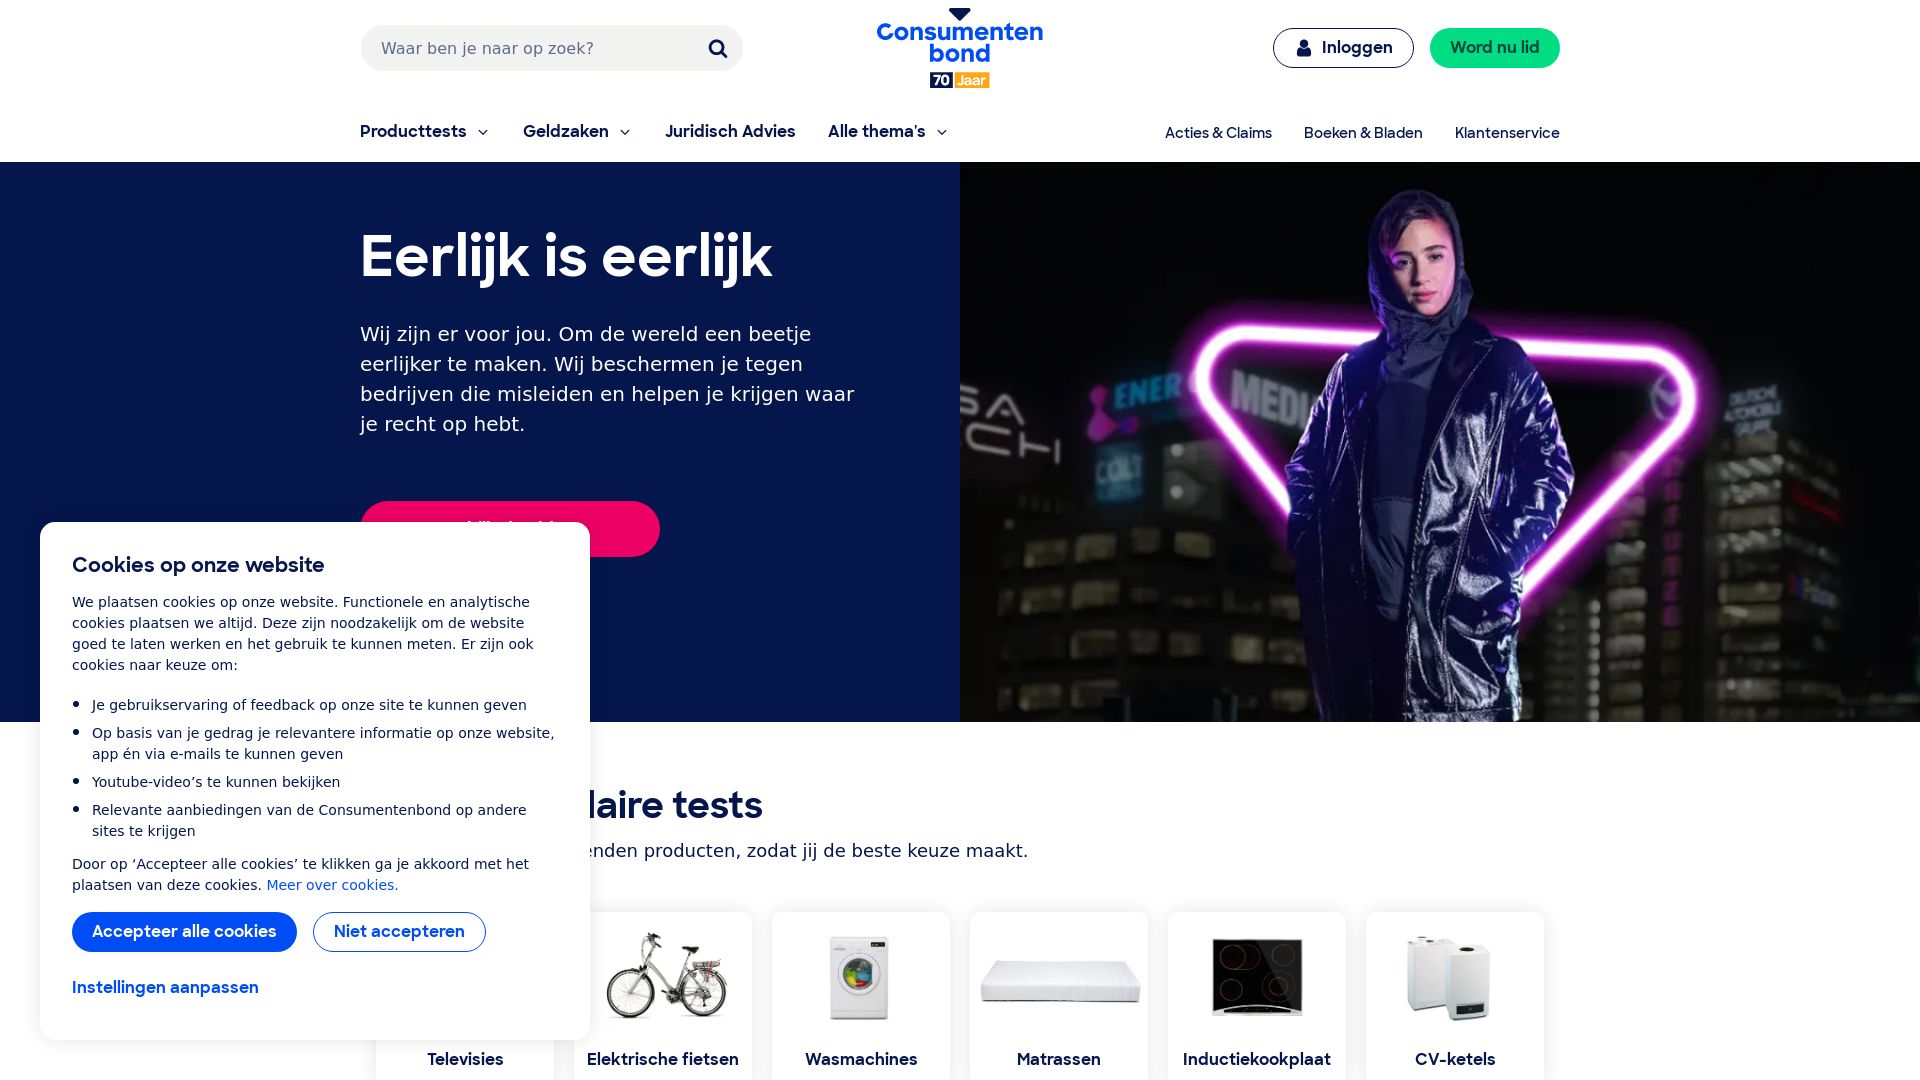 Estado web consumentenbond.nl está   ONLINE